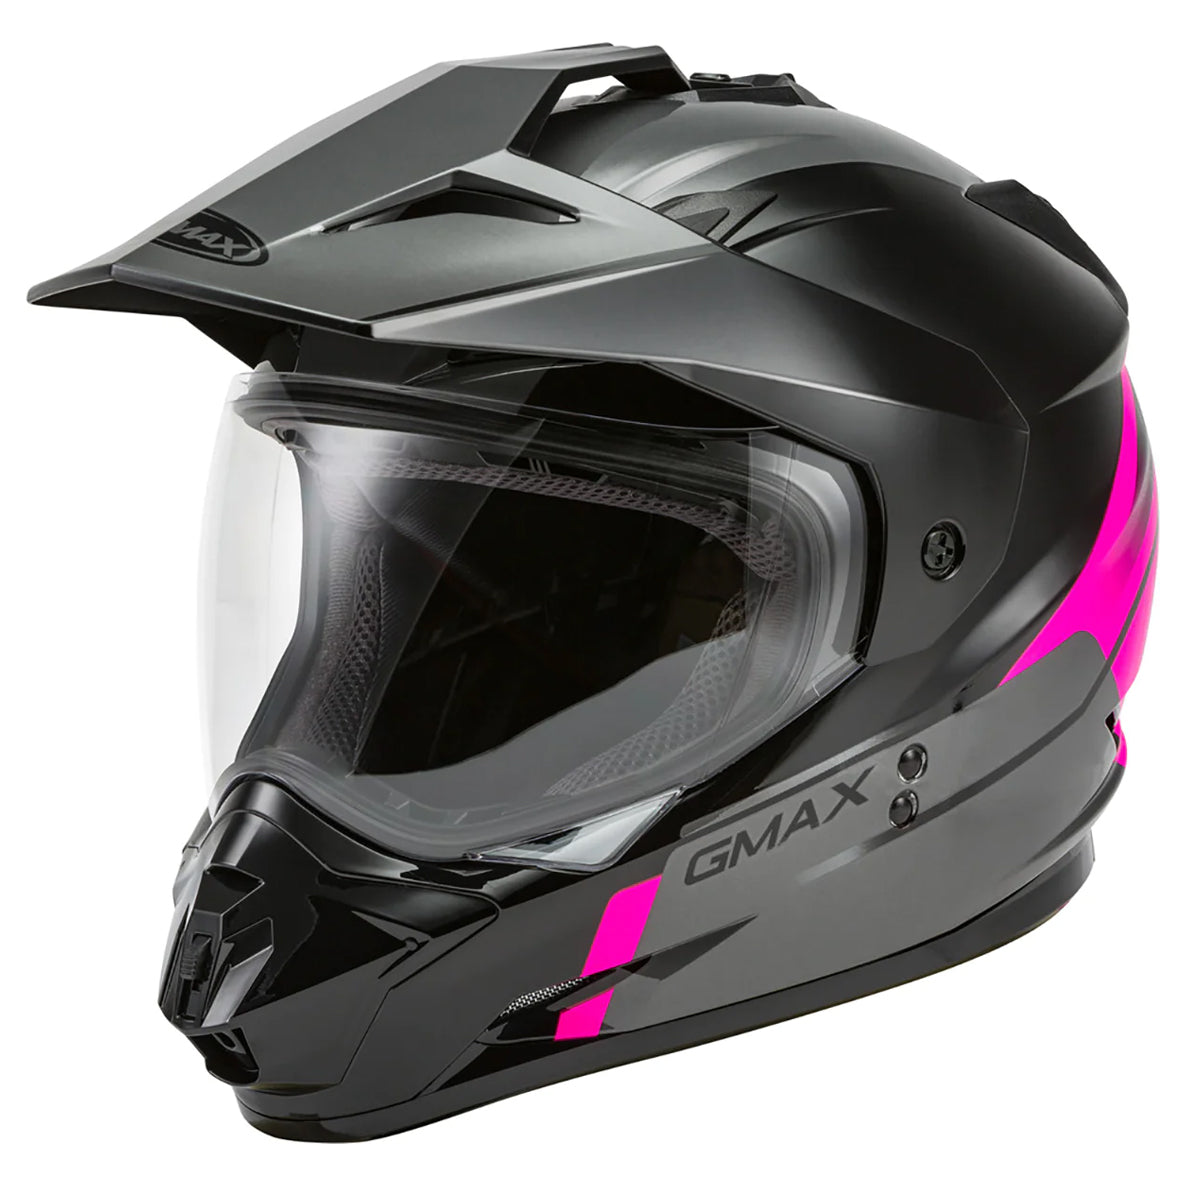   GMAX GM-11 Scud Dual Sport Adult Off-Road Helmets